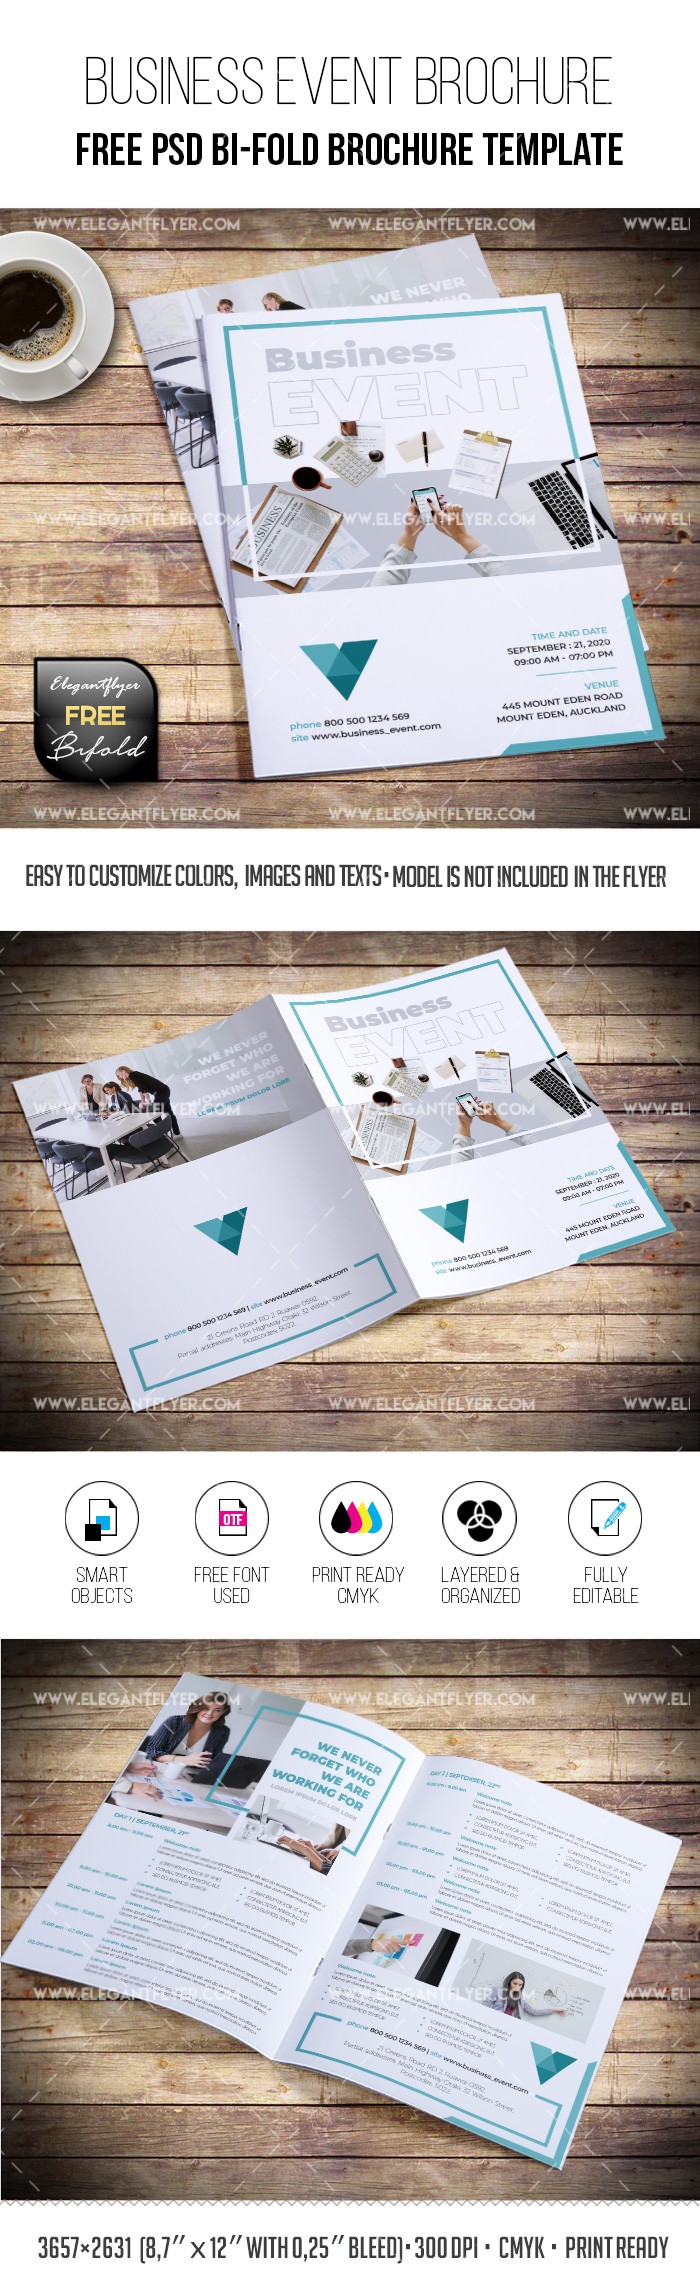 Business Event – Free Bi-Fold PSD Brochure Template by ElegantFlyer